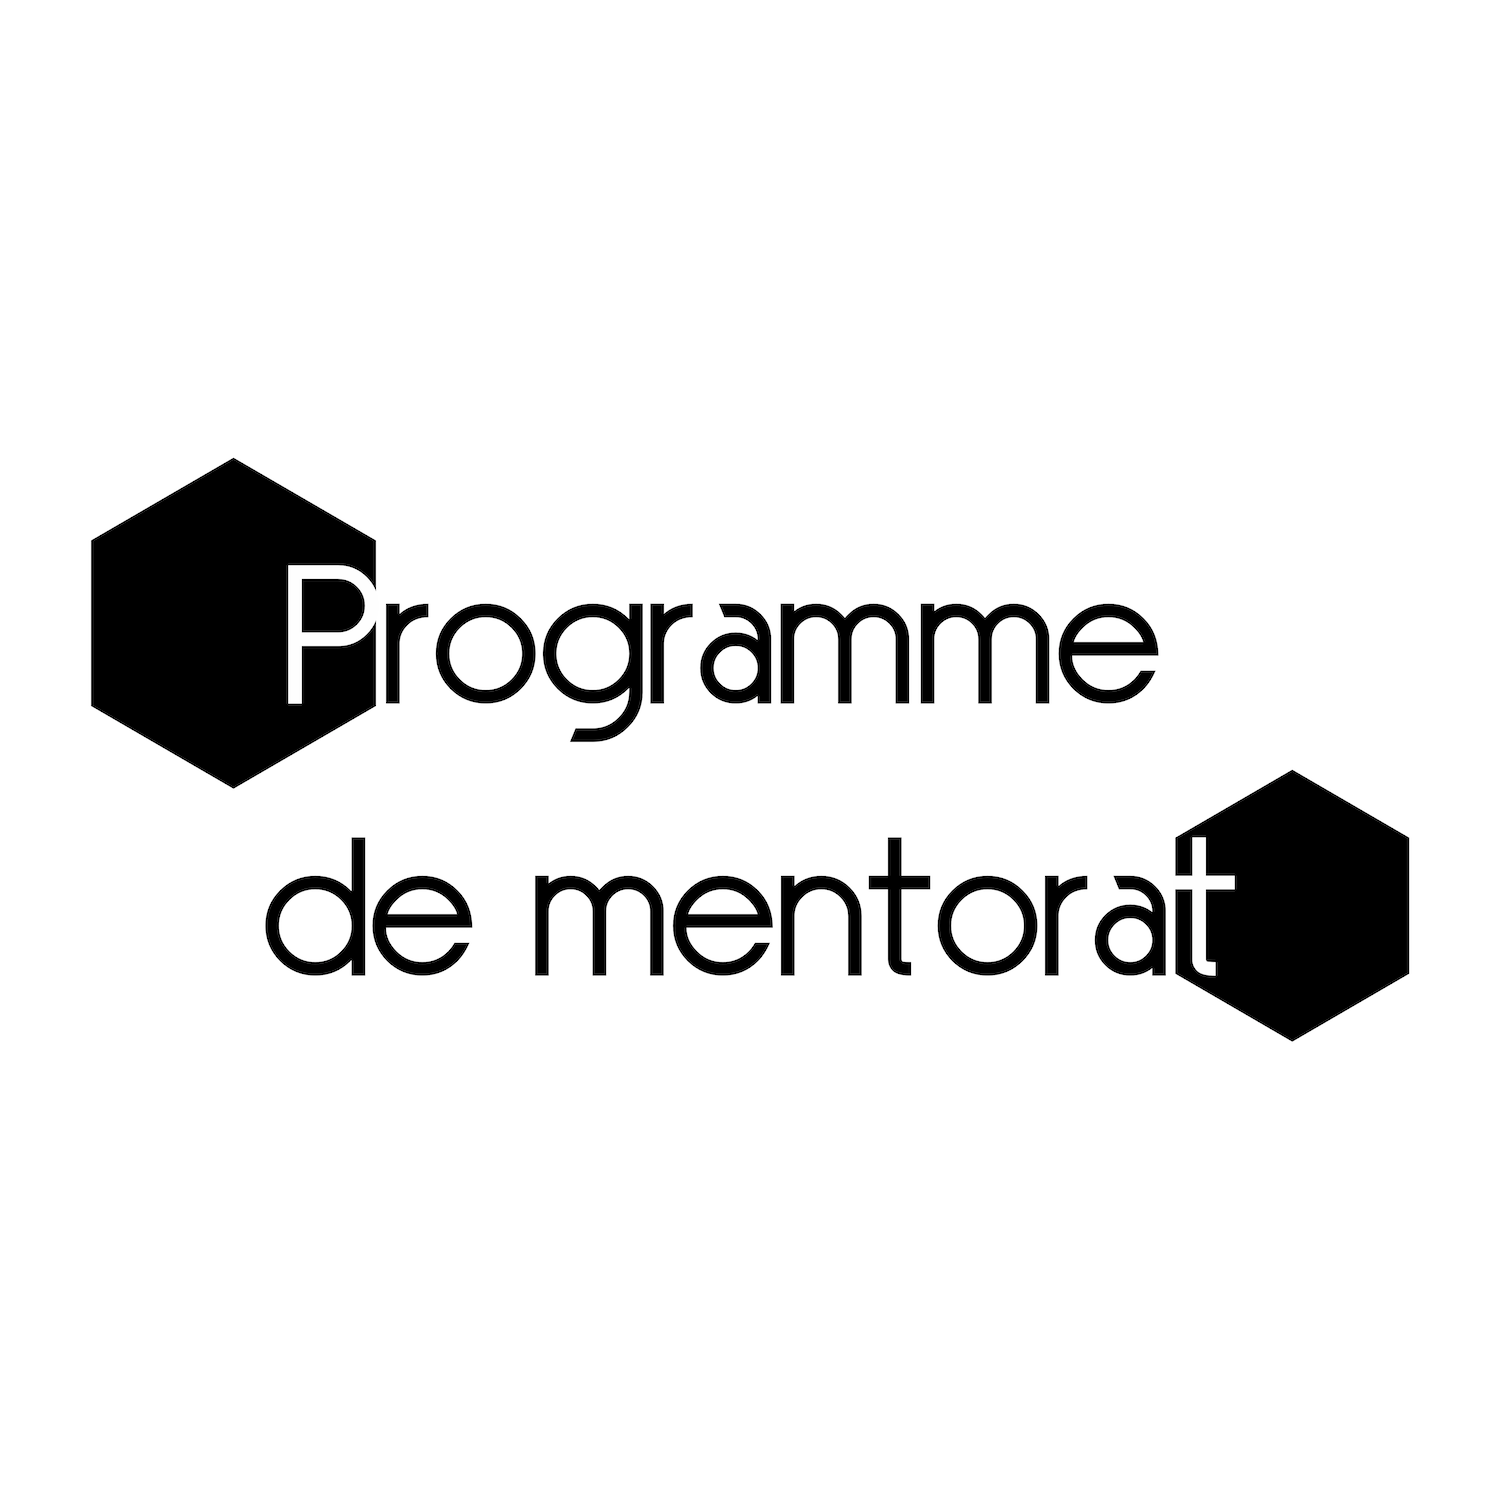 Programme de mentorat